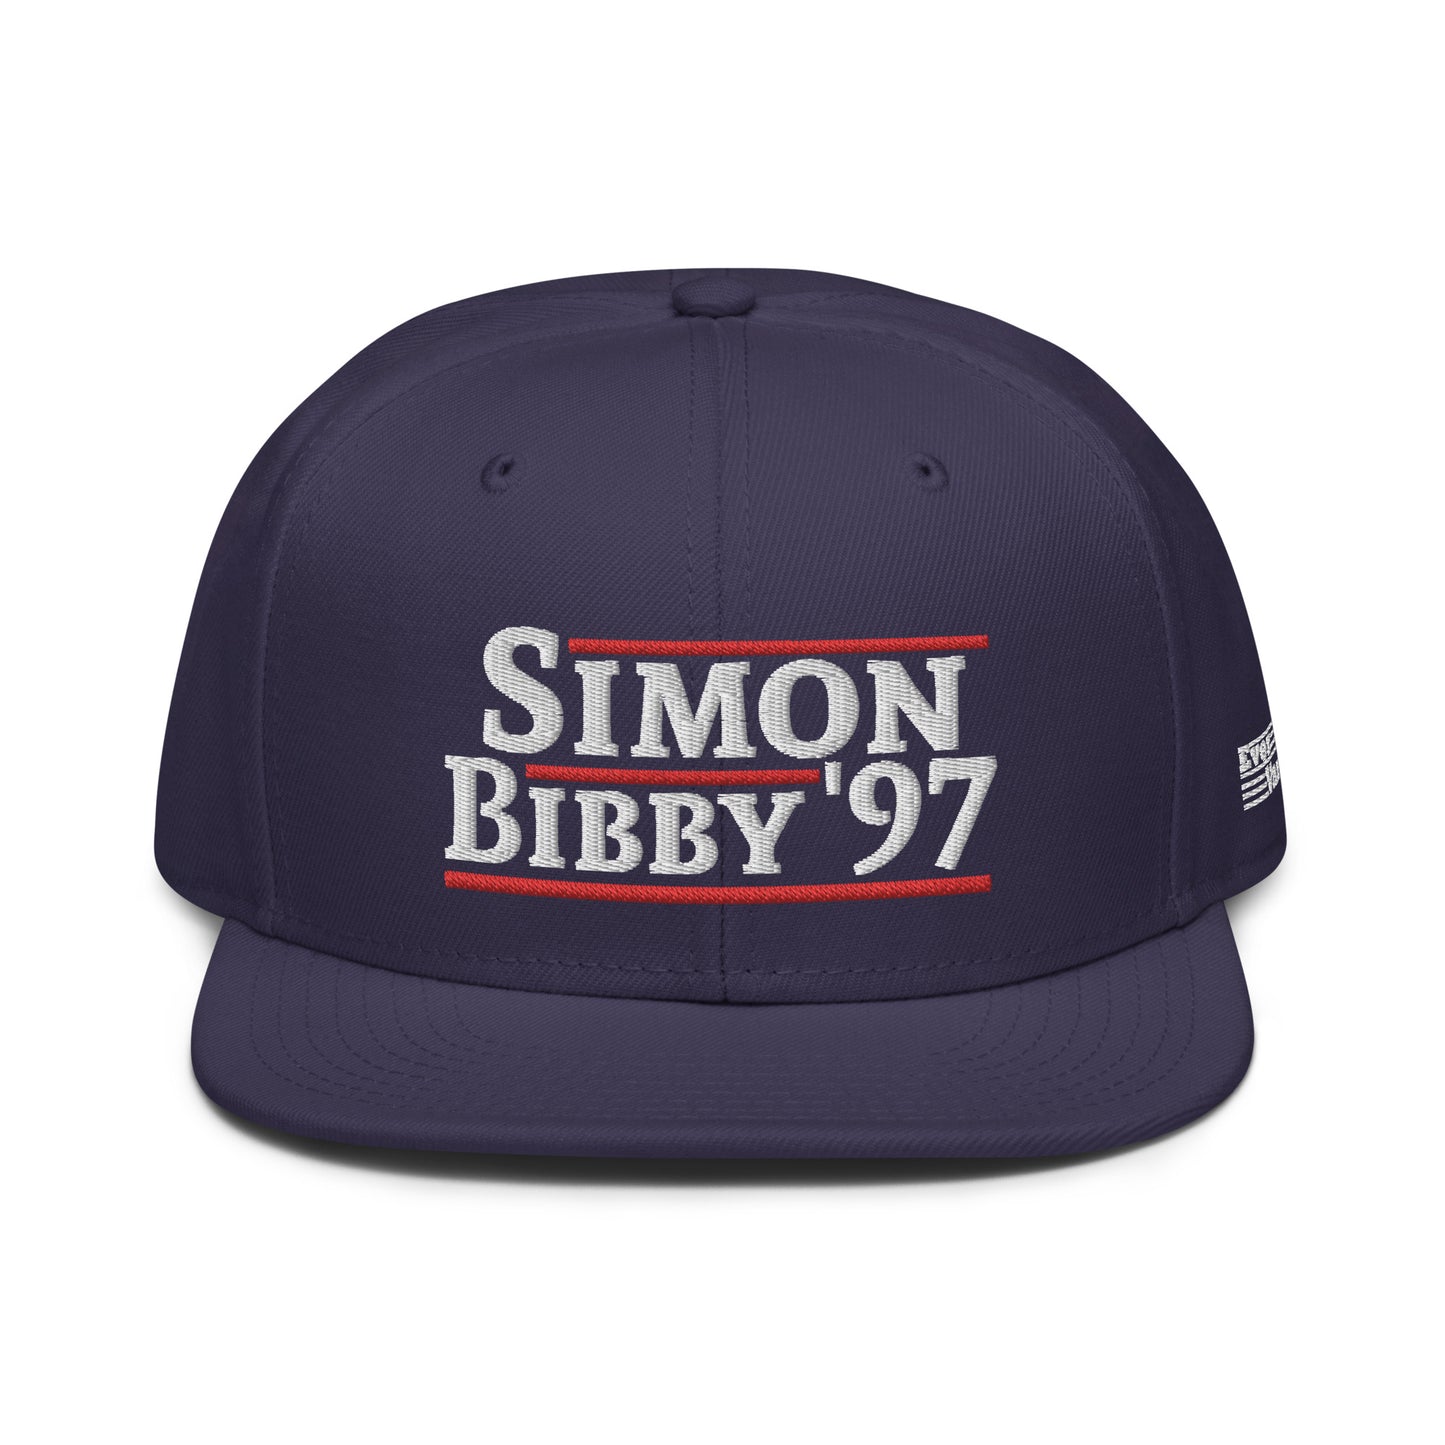 Simon/Bibby '97 - Snapback Hat